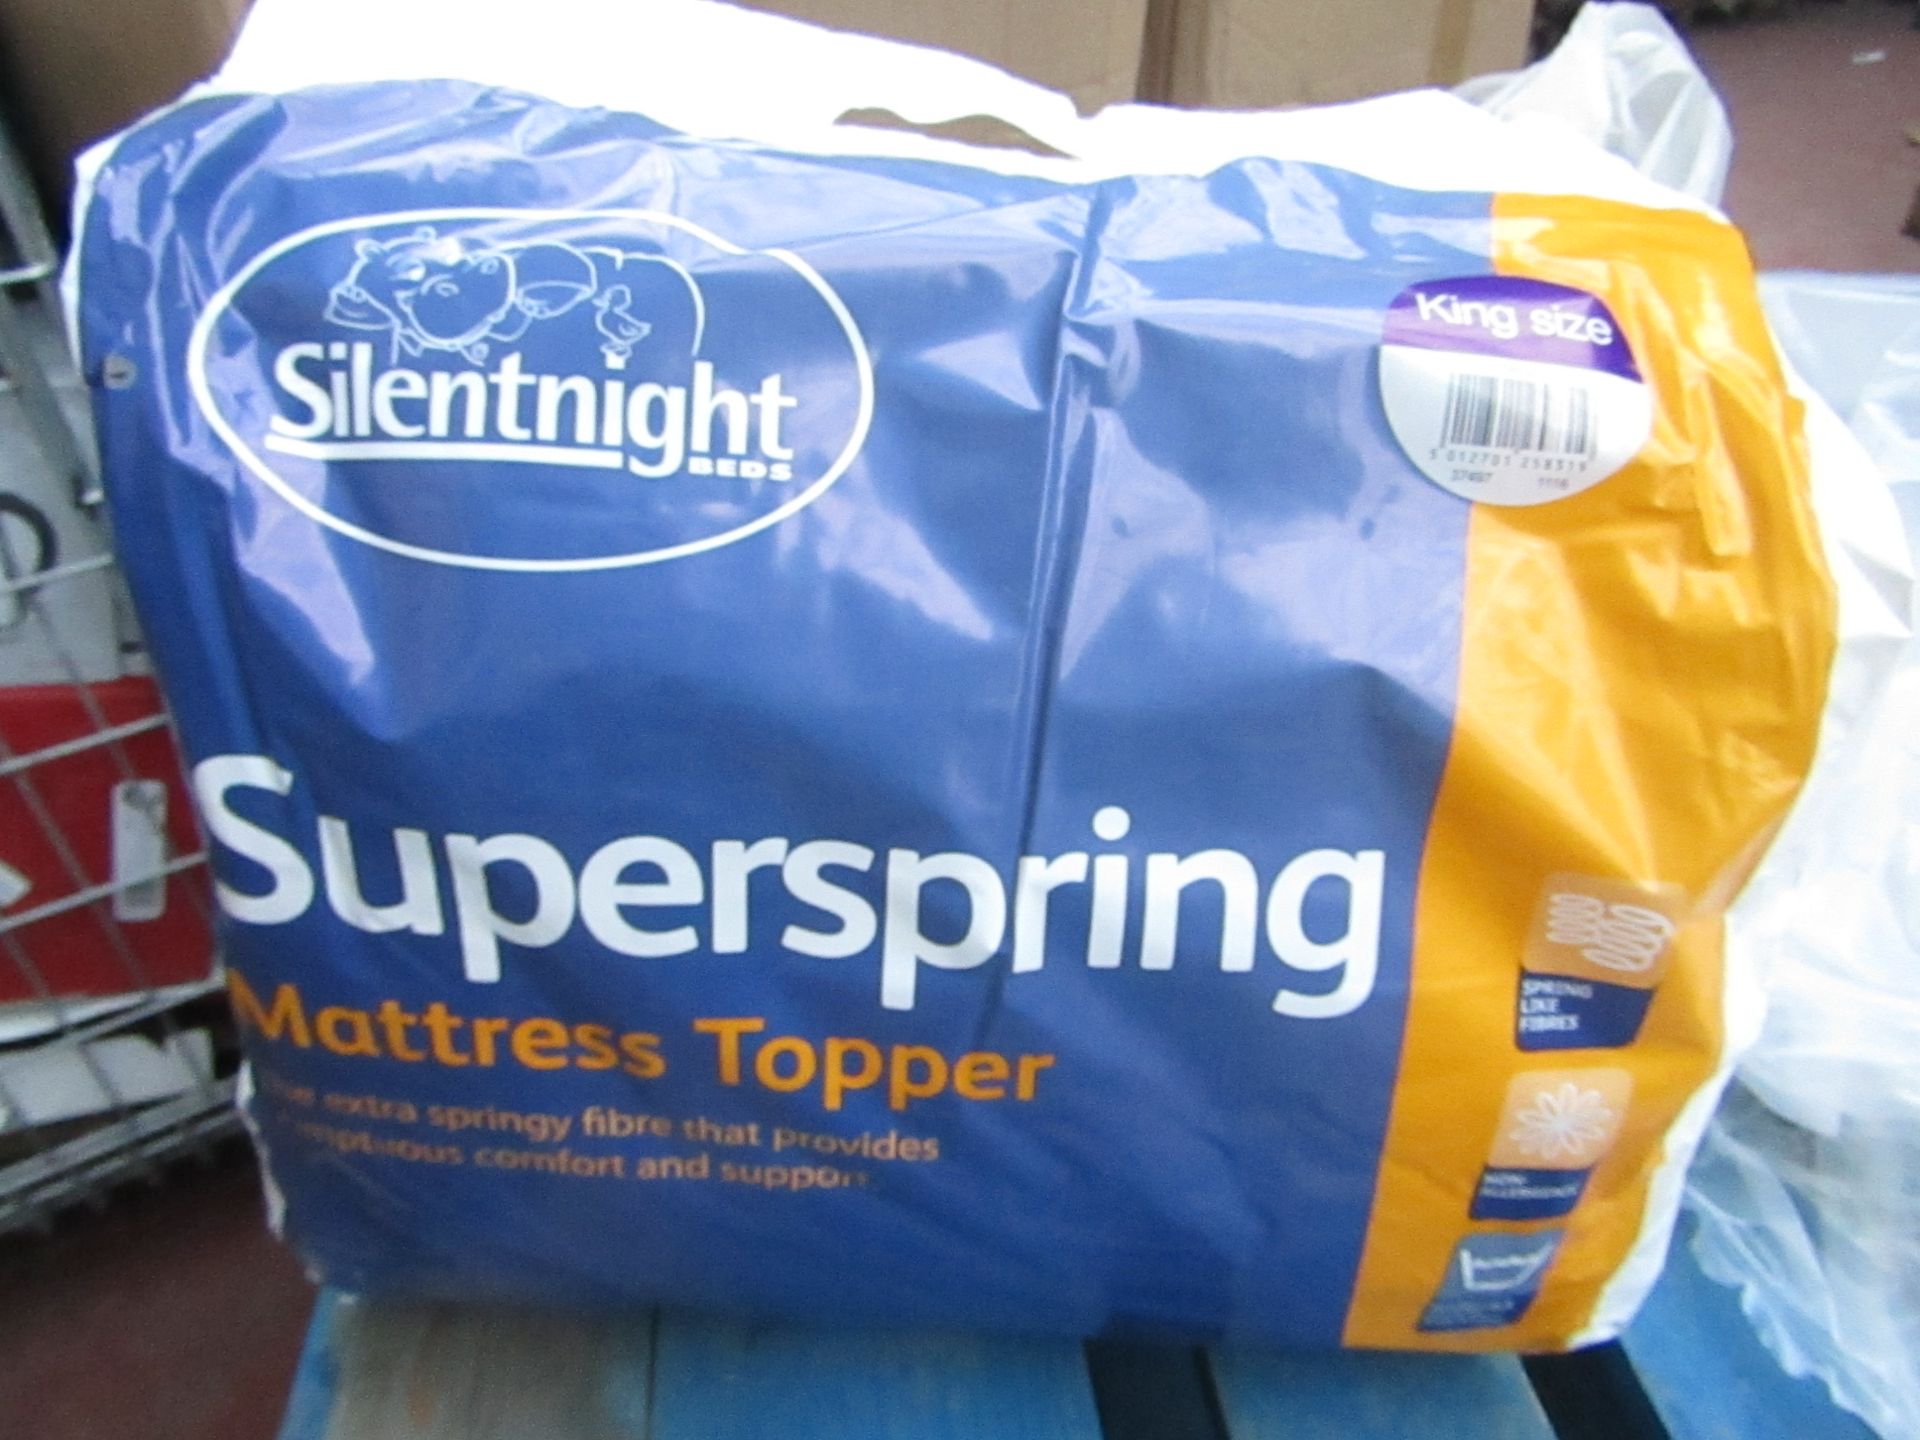 24x Silentnight Super Spring mattress topper, kingsize, all brand new and packaged. Each RRP £29.99